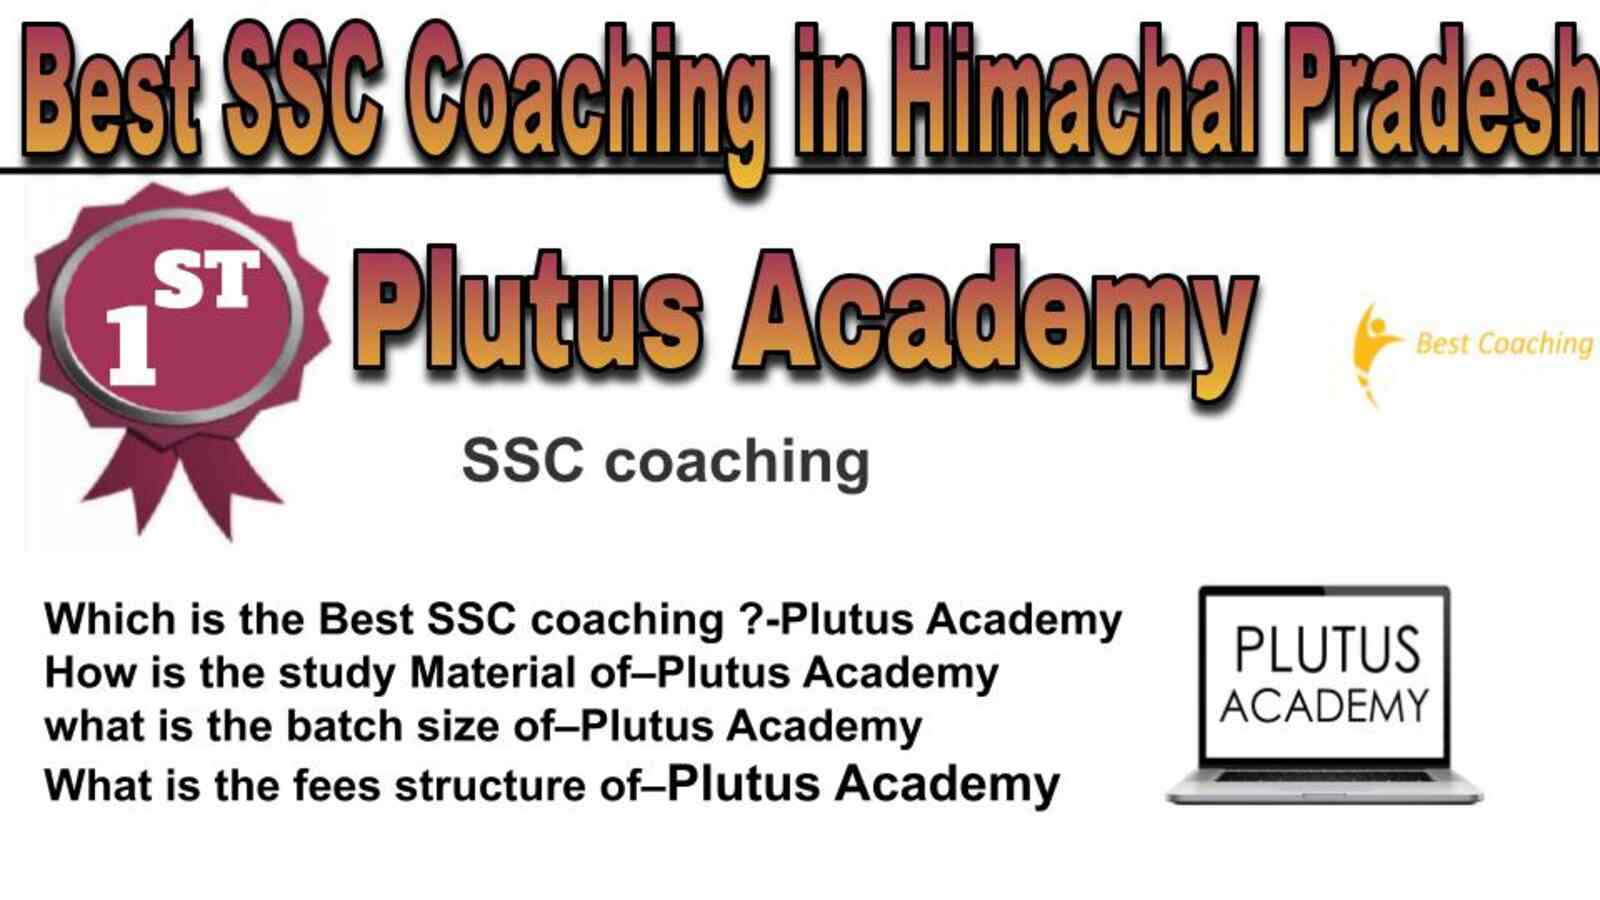 Rank 1 best SSC coaching in Himachal Pradesh